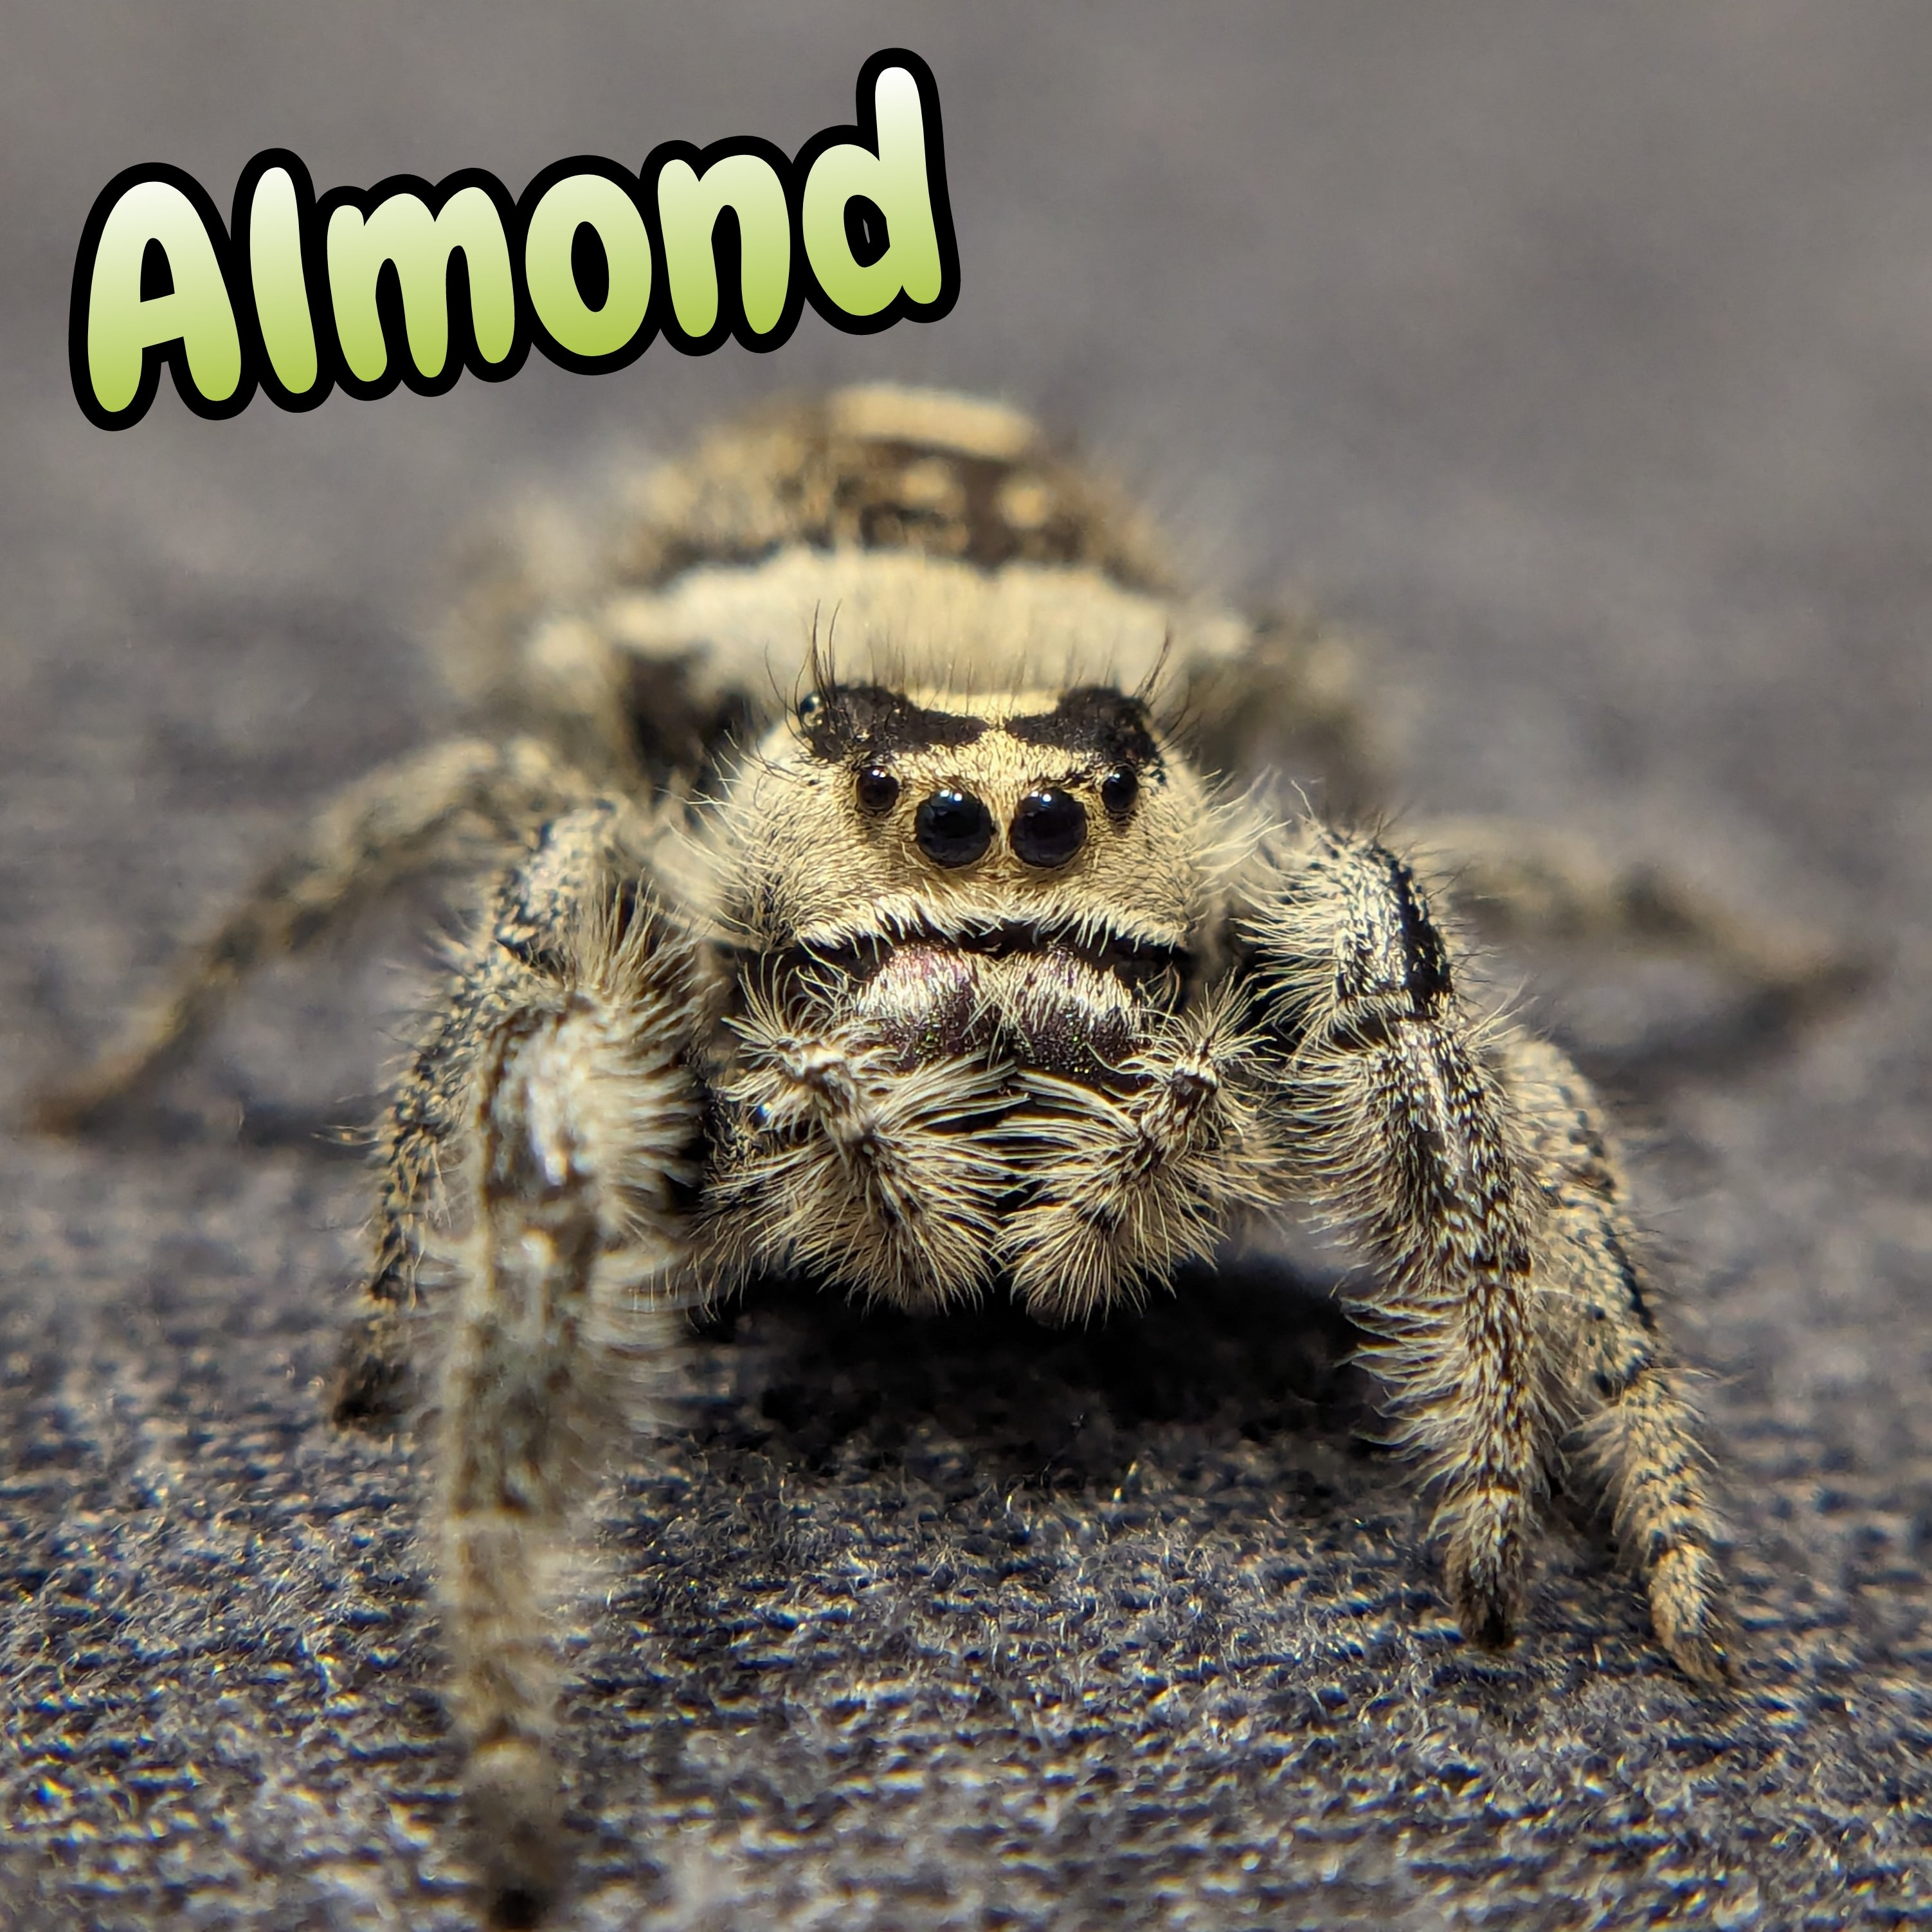 Regal Jumping Spider "Almond"